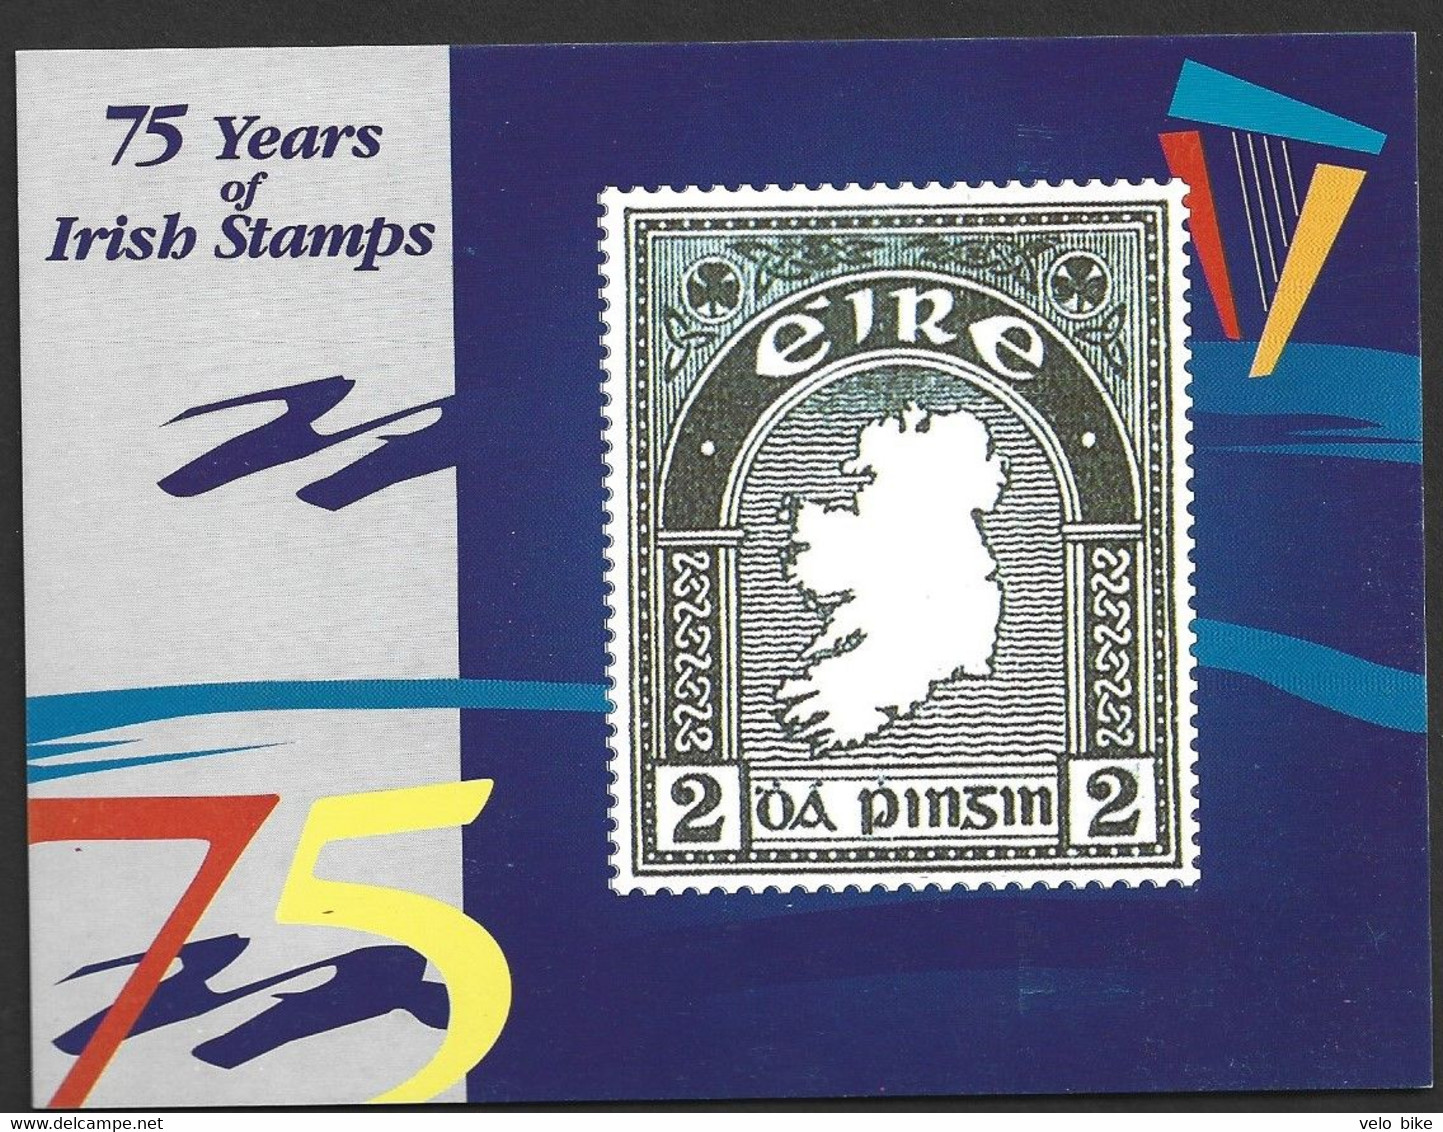 Eire Ireland  Postal Stationery Postage Paid  Exhibition Card Government Of Ireland Rialtas Na HÉireann - Postal Stationery